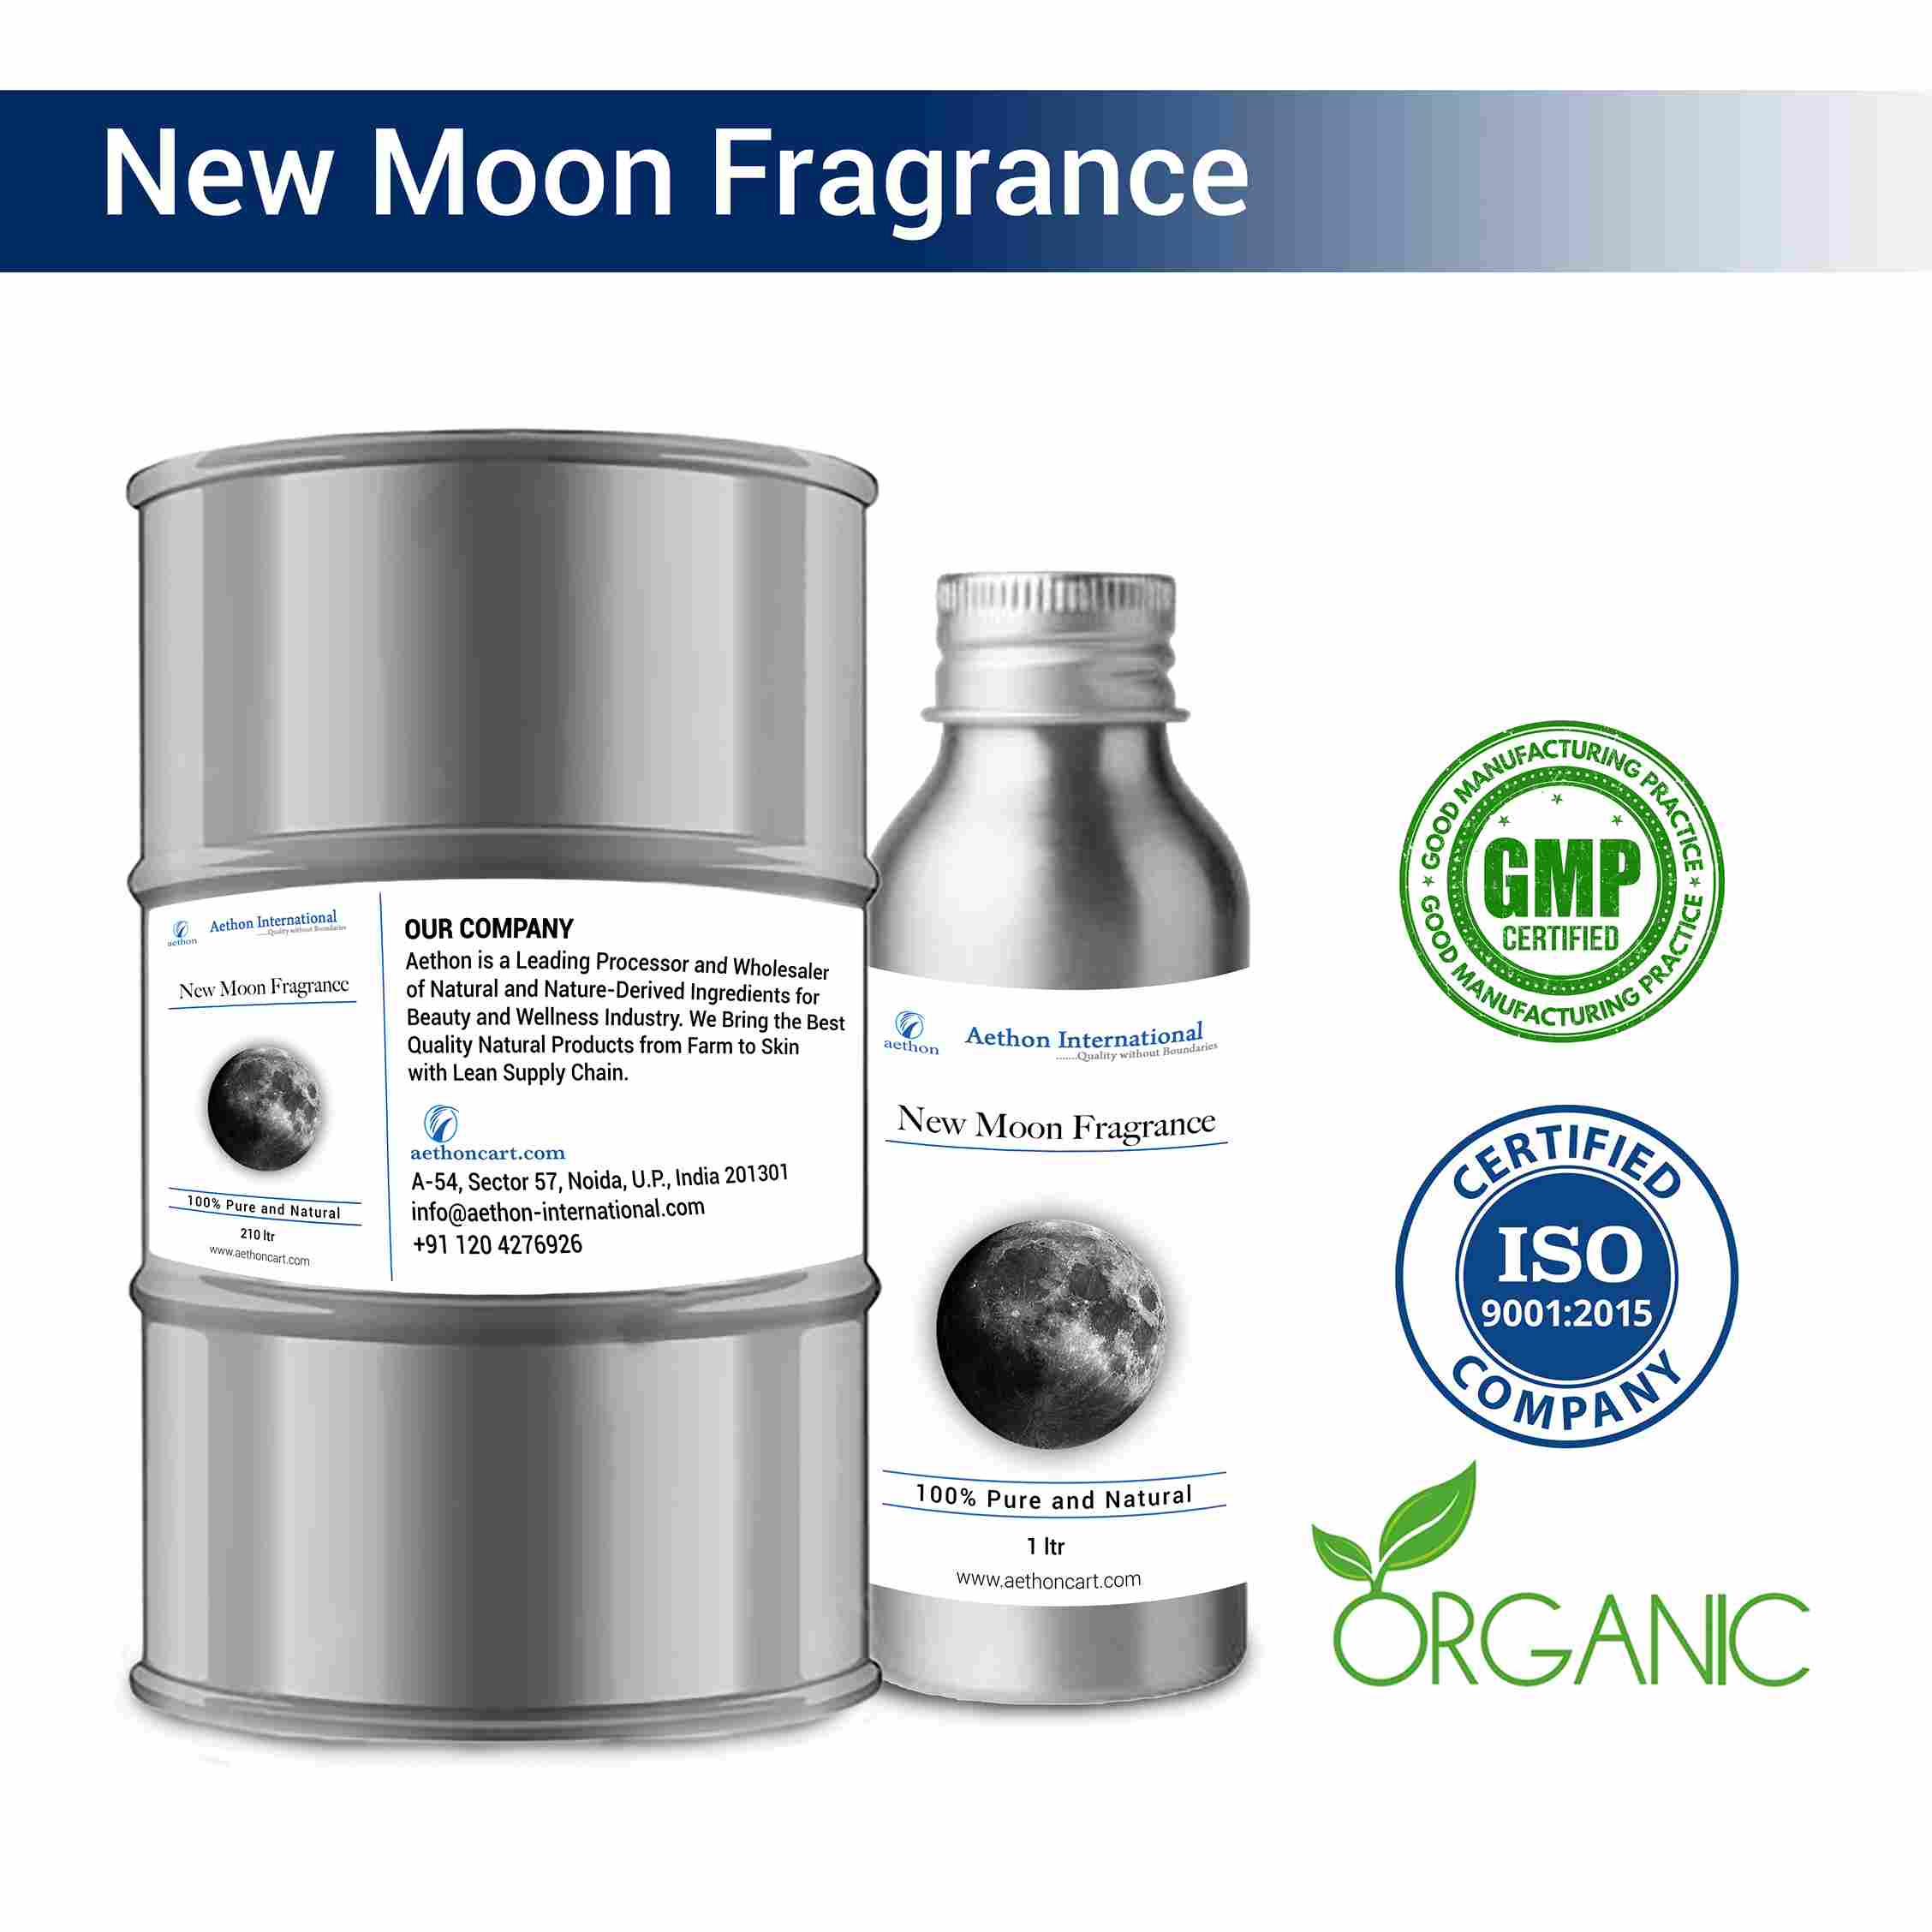 New Moon Fragrance